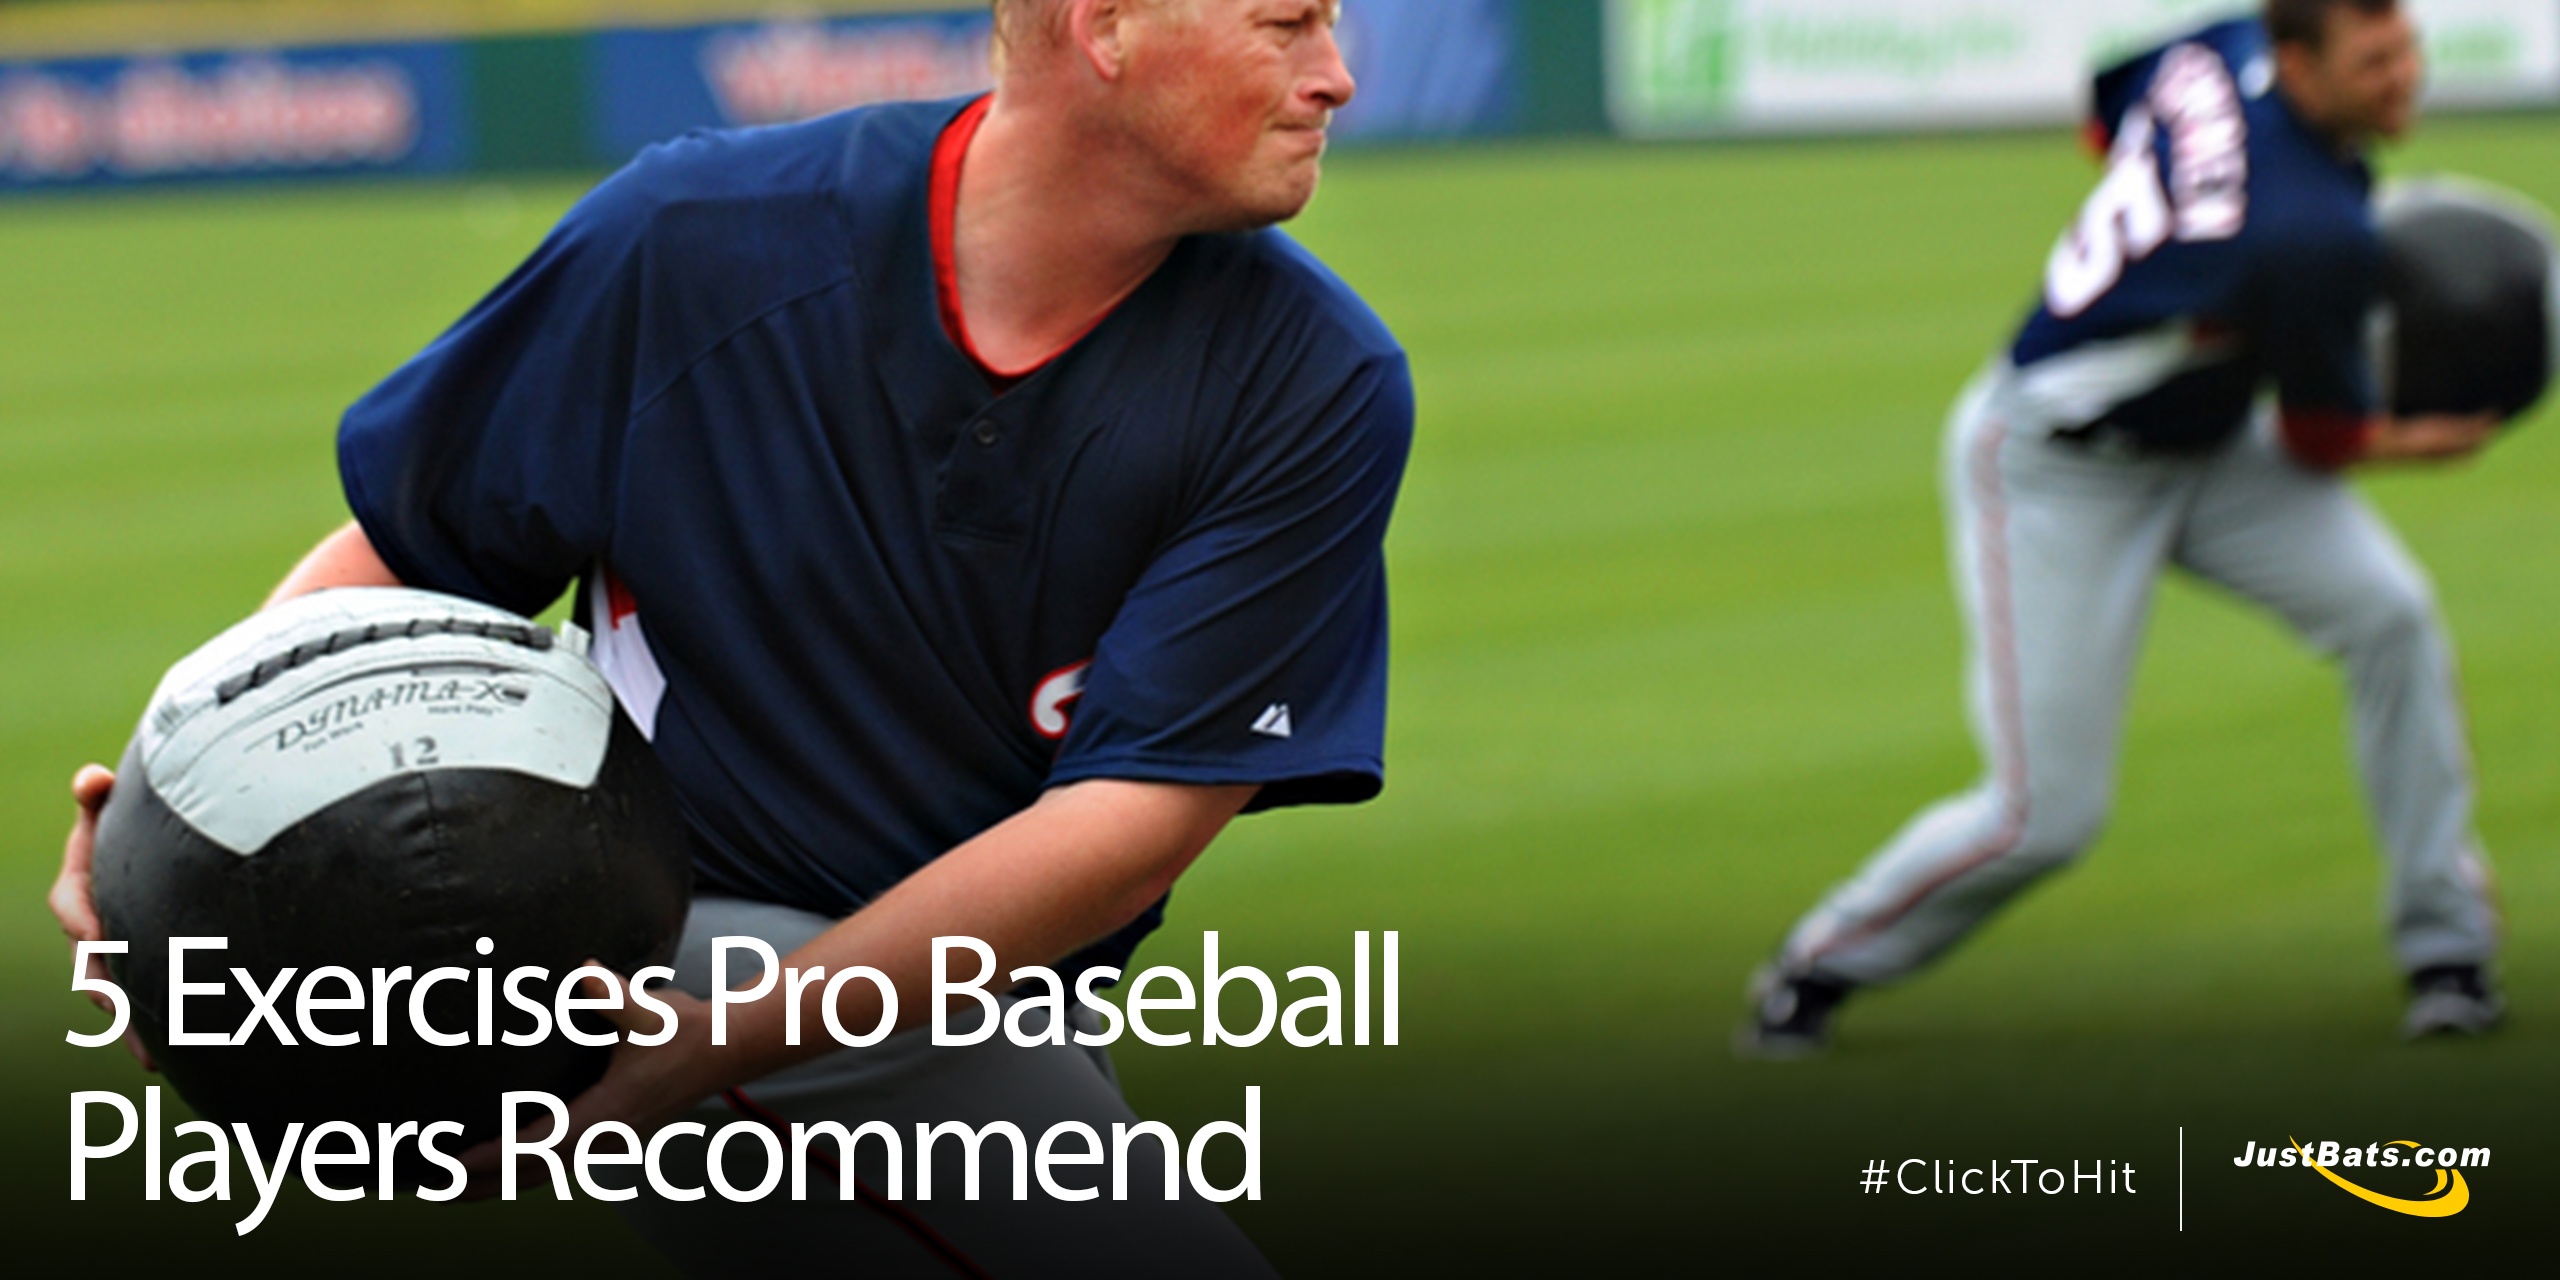 5 Exercises Pro Baseball Players Recommend - Blog.jpg